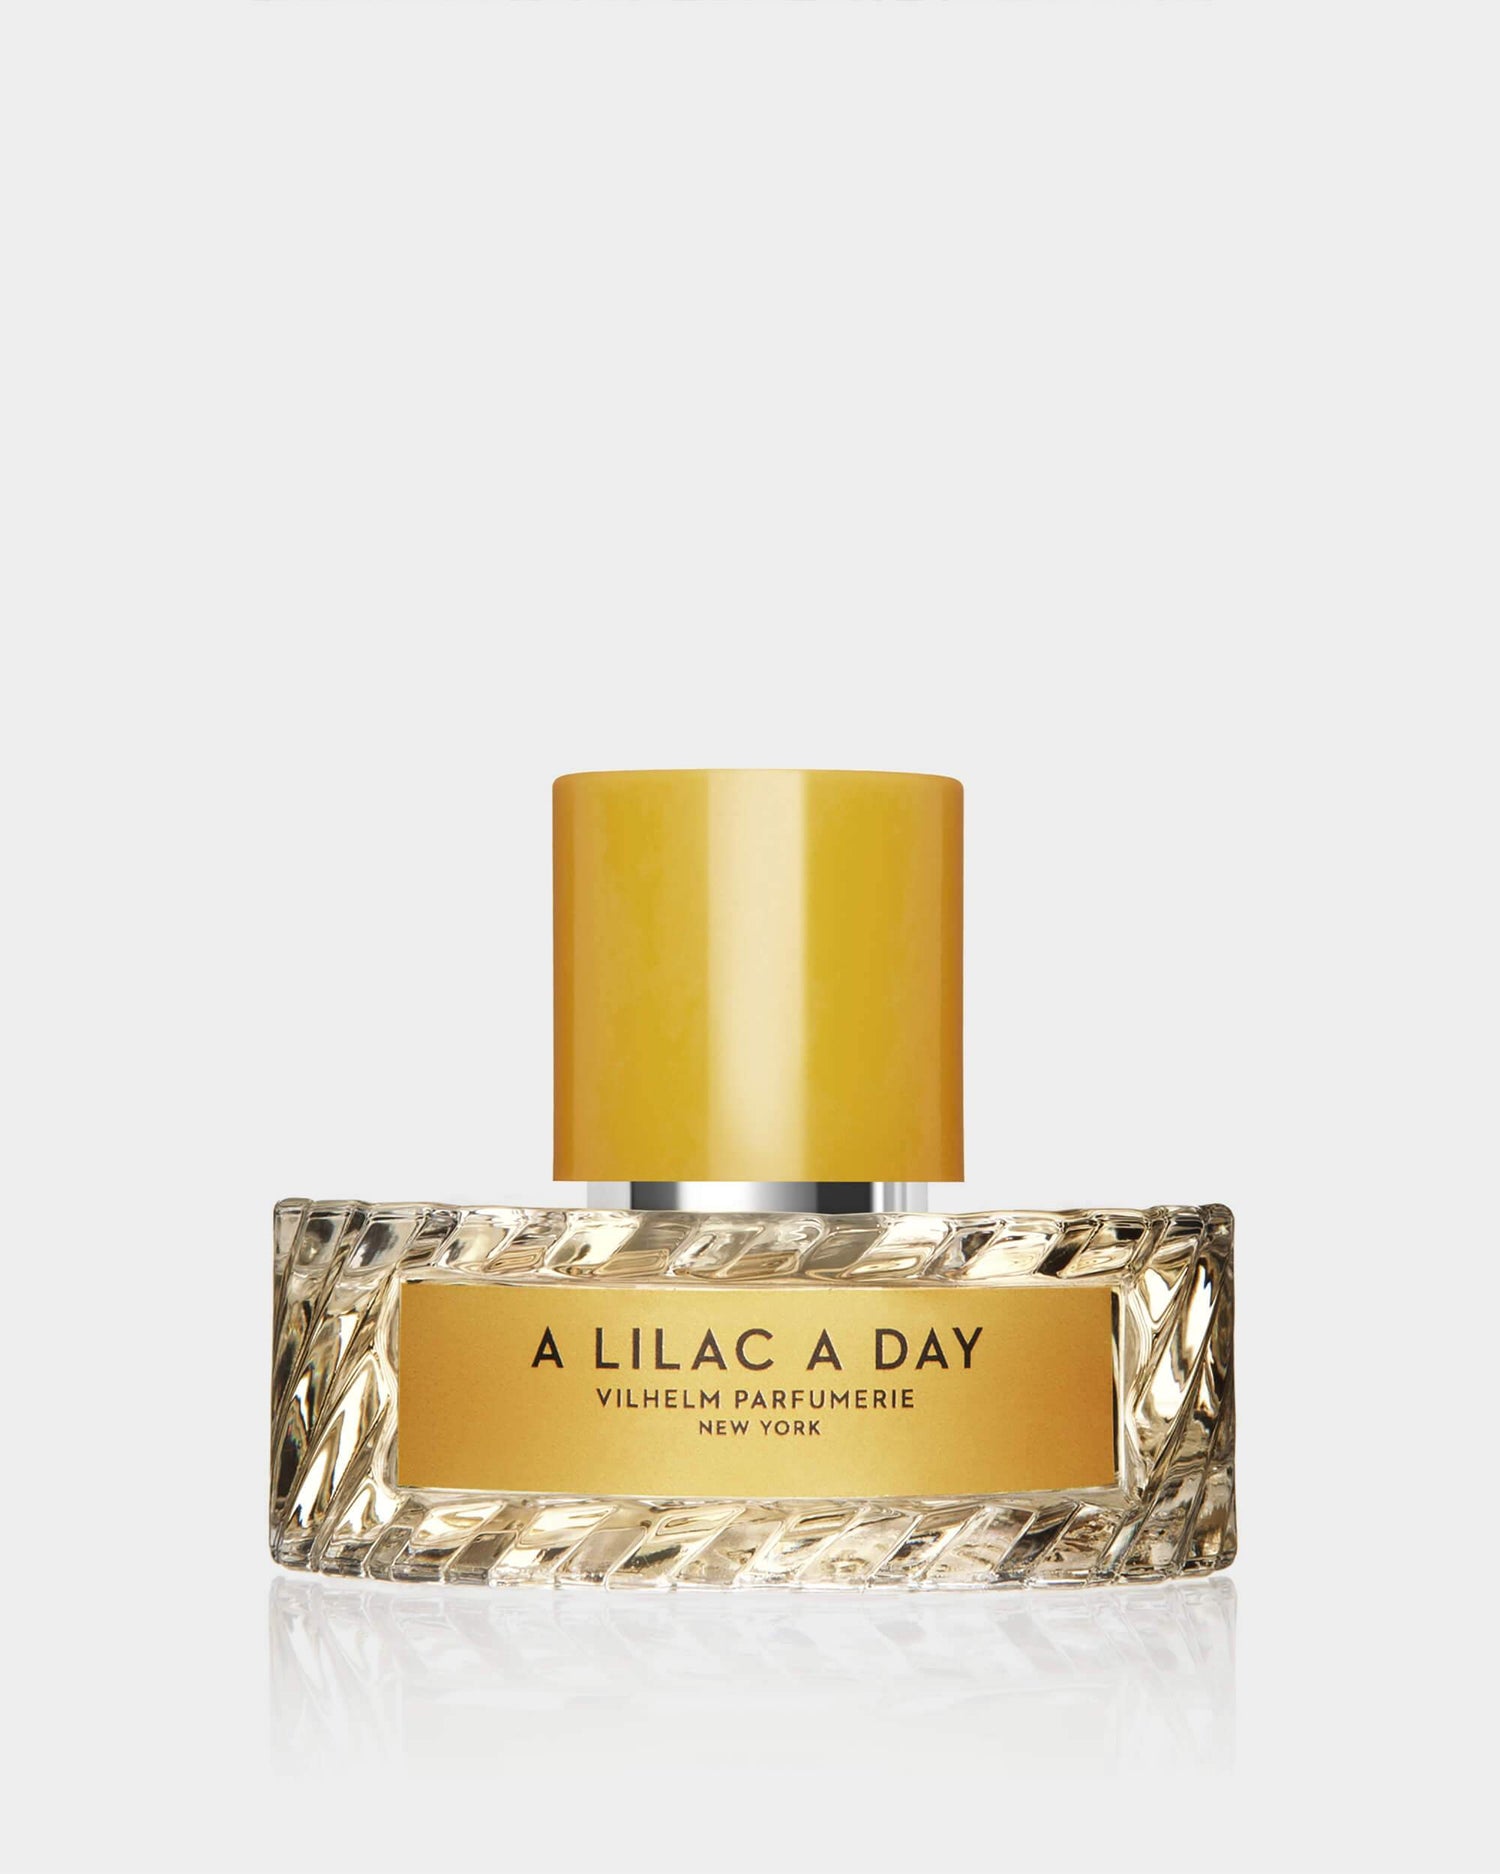 A LILAC A DAY - Vilhelm Parfumerie